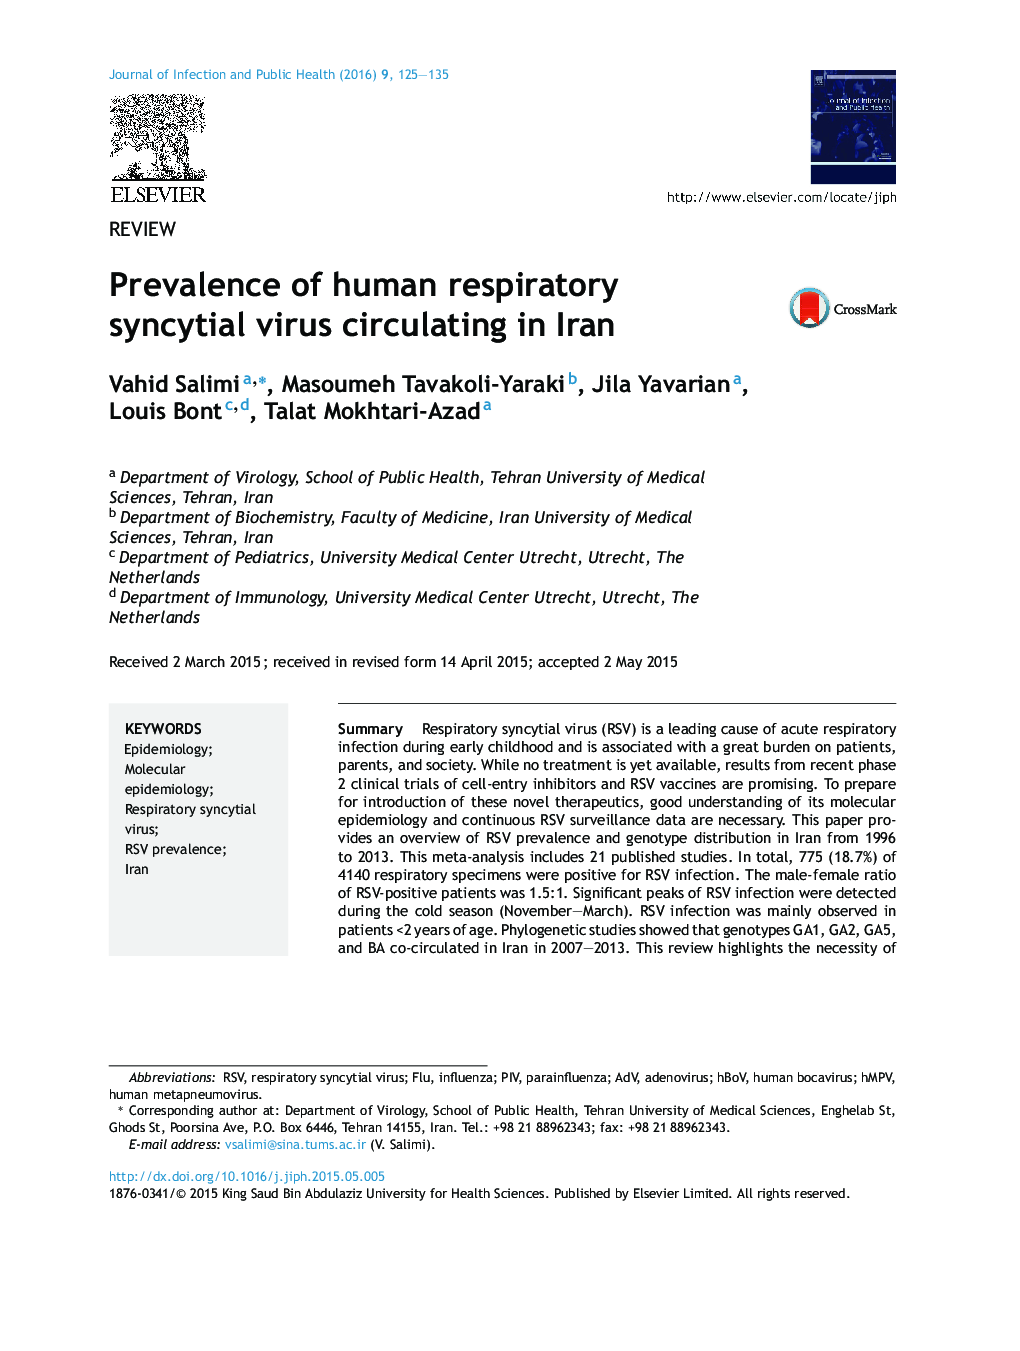 Prevalence of human respiratory syncytial virus circulating in Iran